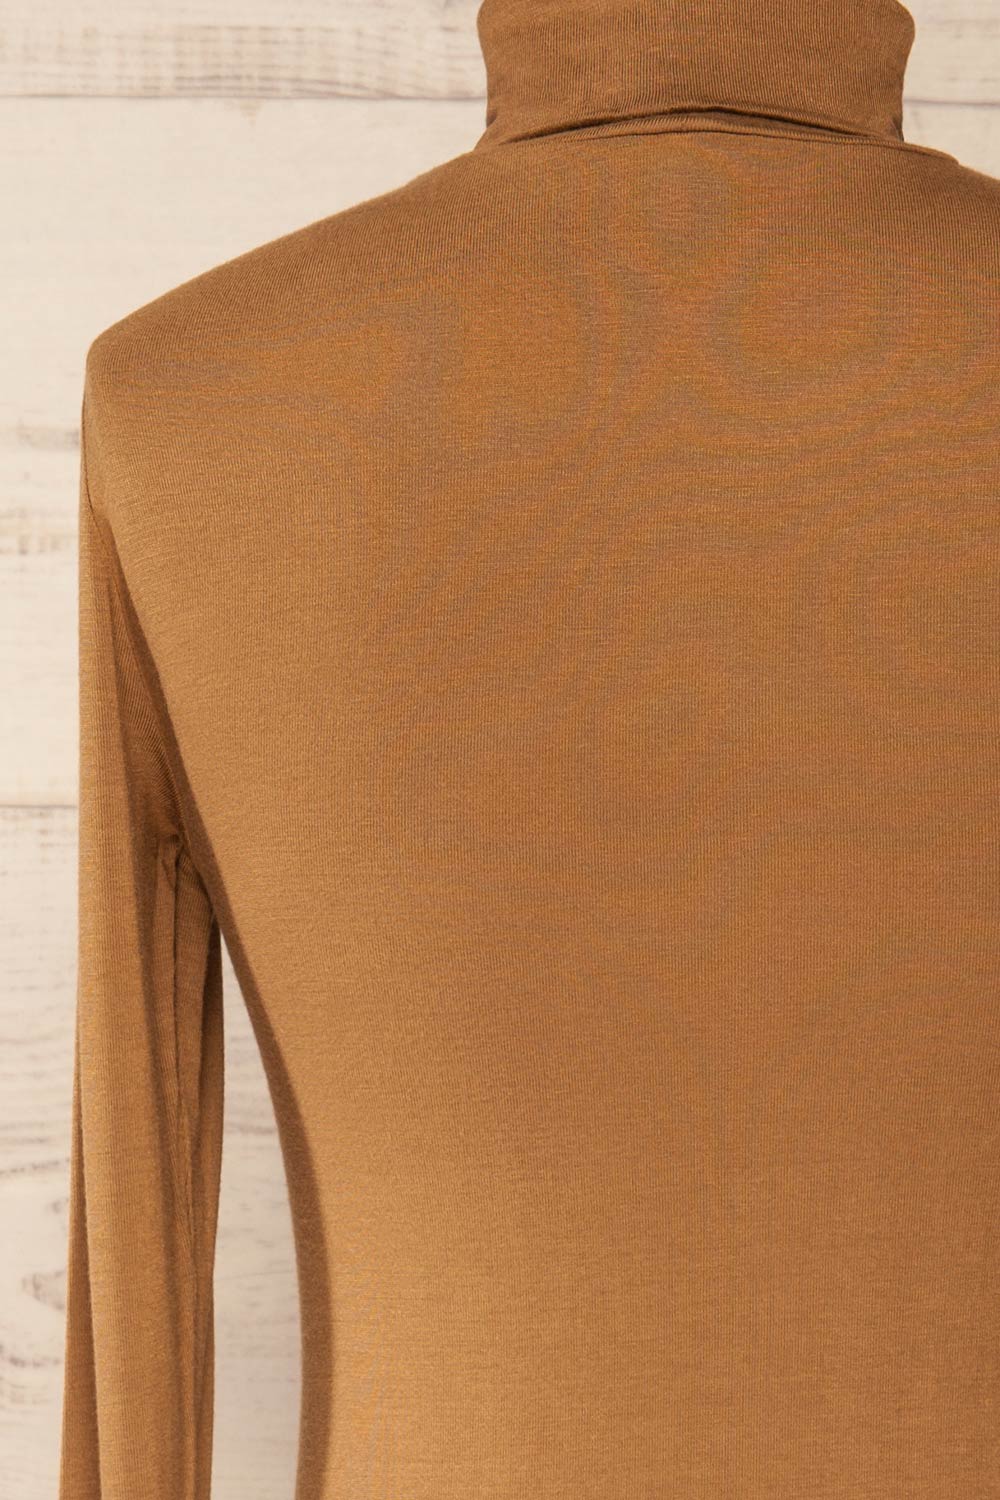 Lassi Caramel | Long Sleeve Turtleneck back close-up